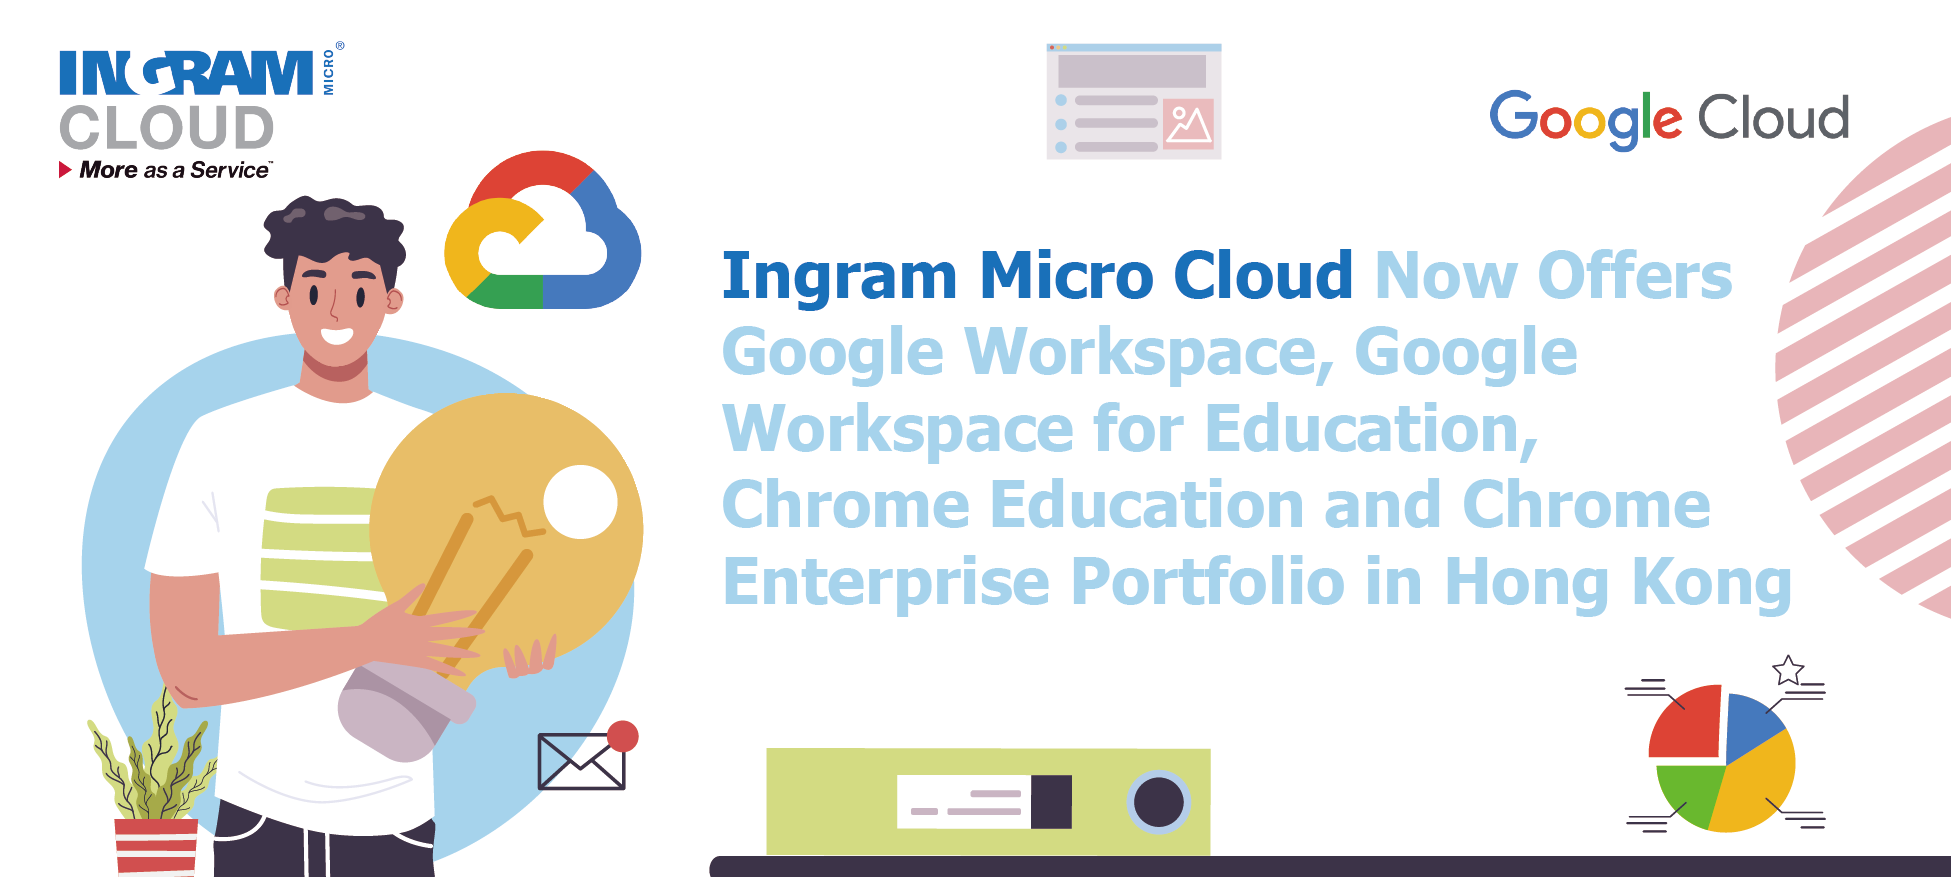 Ingram Micro Cloud Now Offers Google Workspace, Google Workspace for Education, Chrome Education and